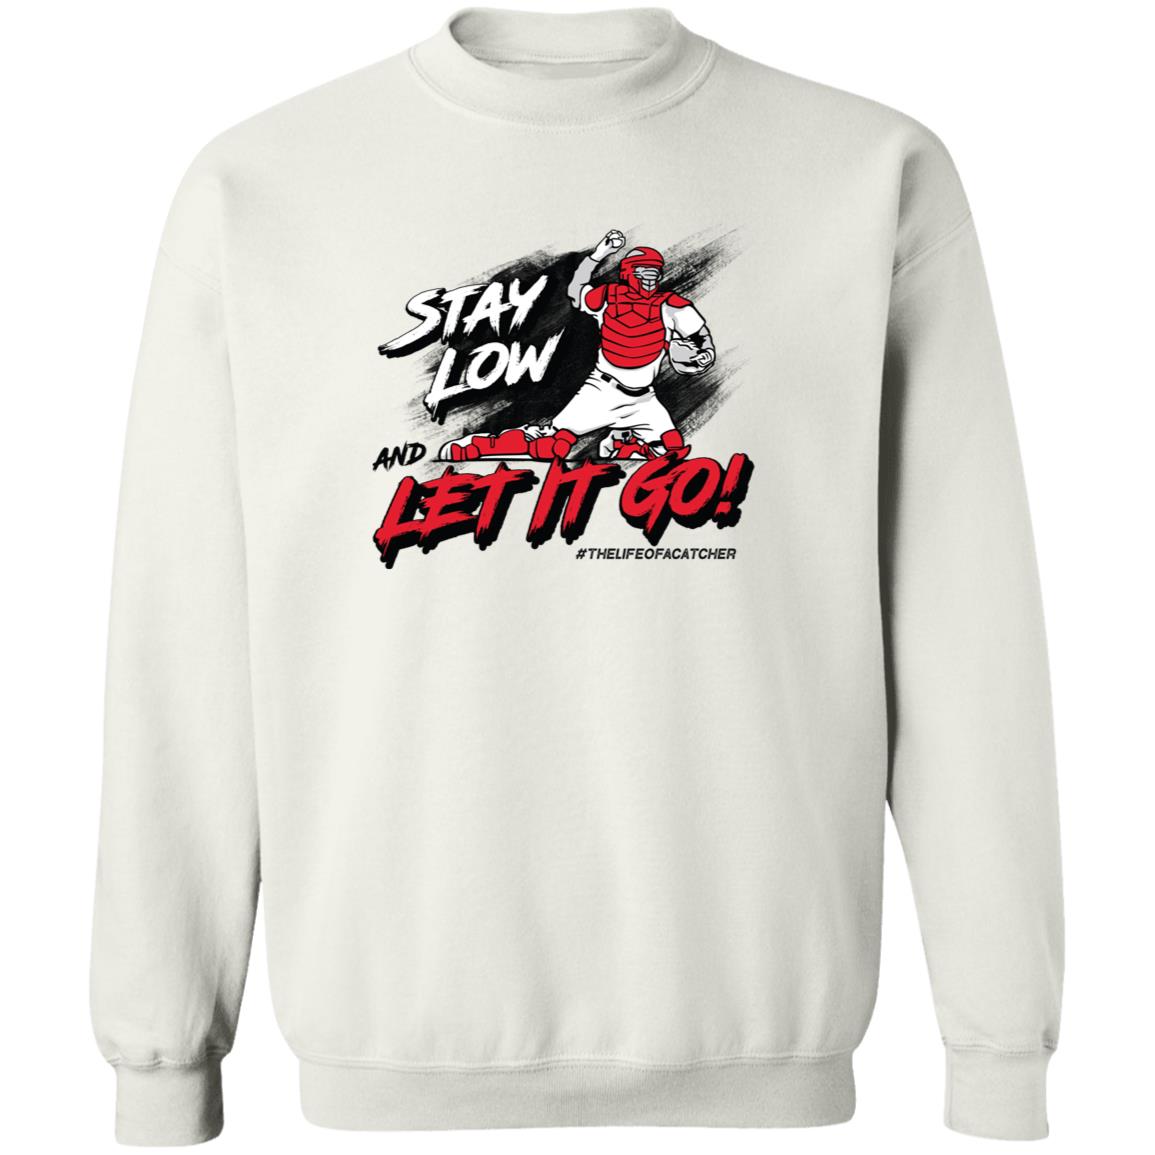 Stay Low & Let It Go Crewneck Sweatshirt - White